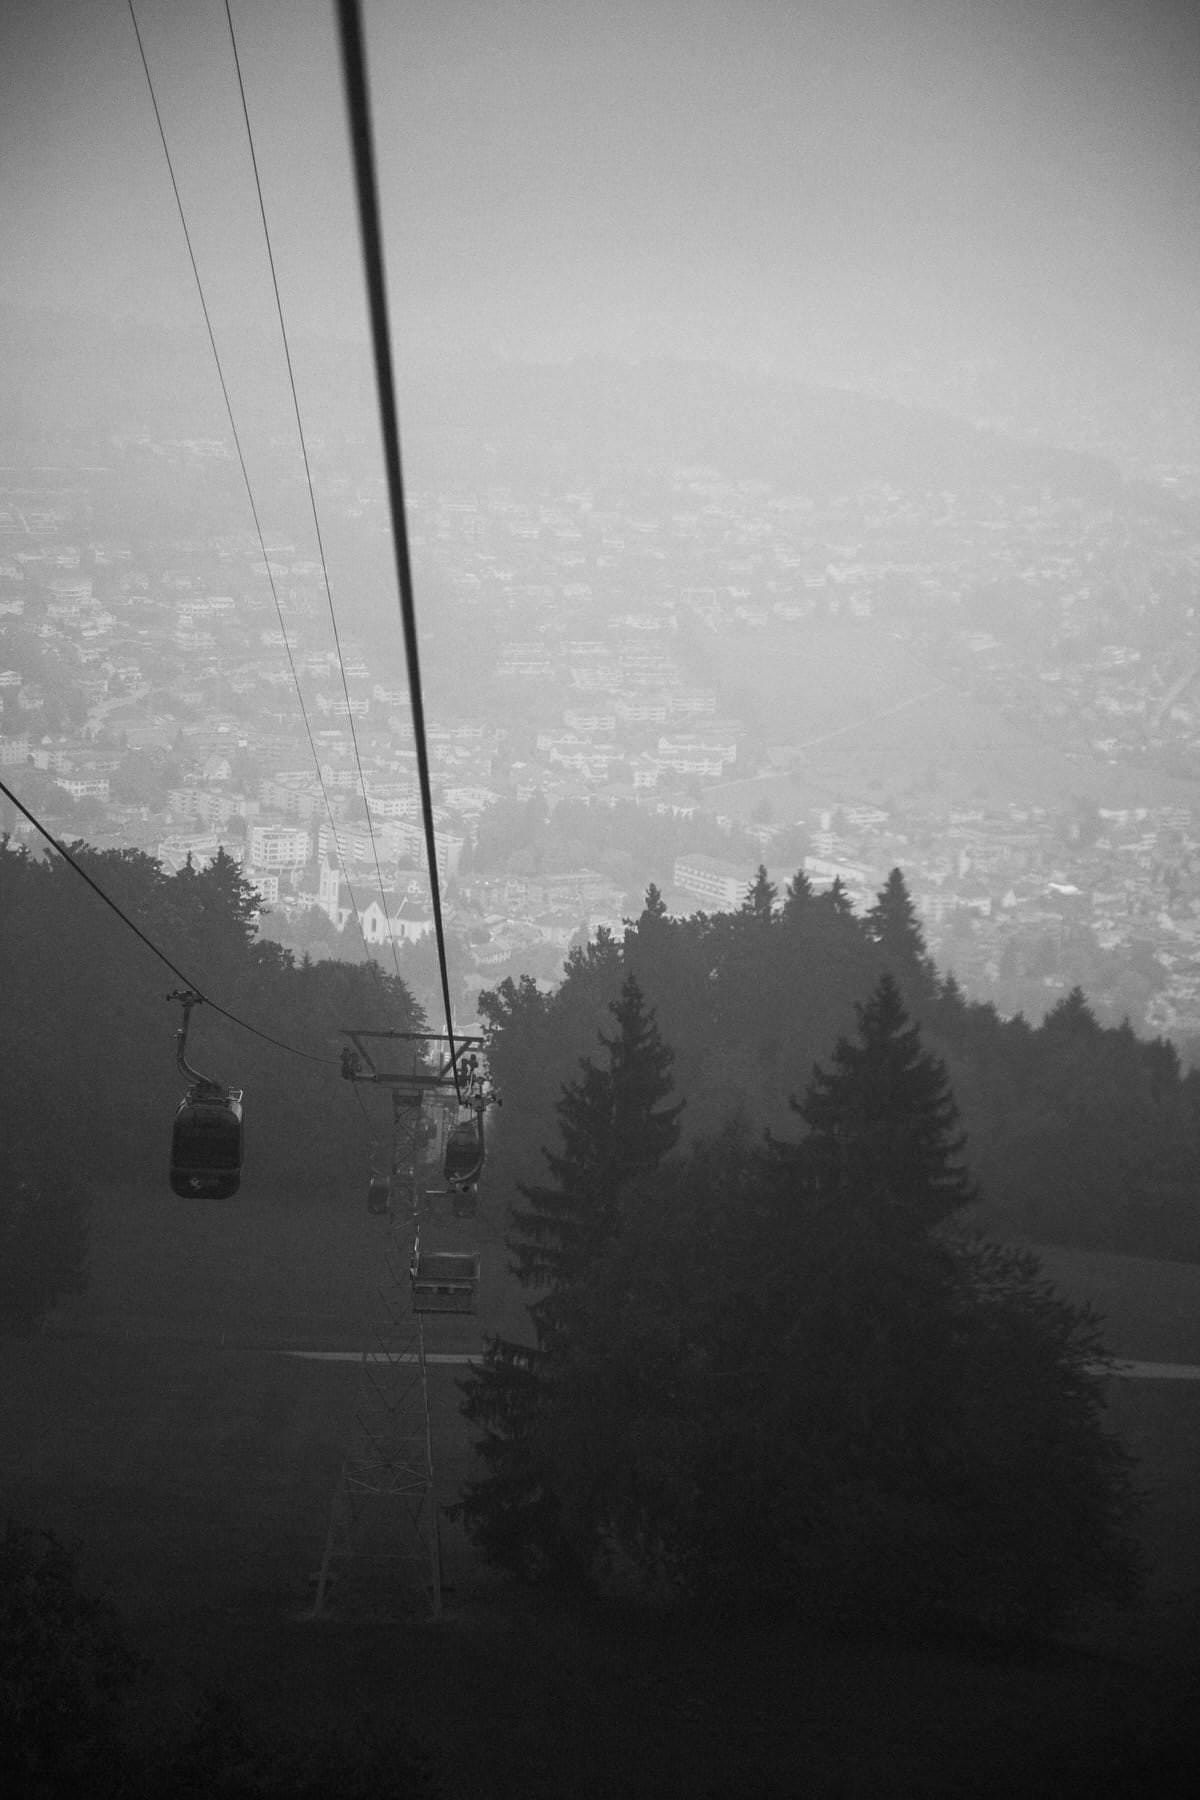 Mount_Pilatus_Lucerne_Switzerland-black-and-white-fine-art-photography-by-Studio-L-photographer-Laura-Schneider-_4420